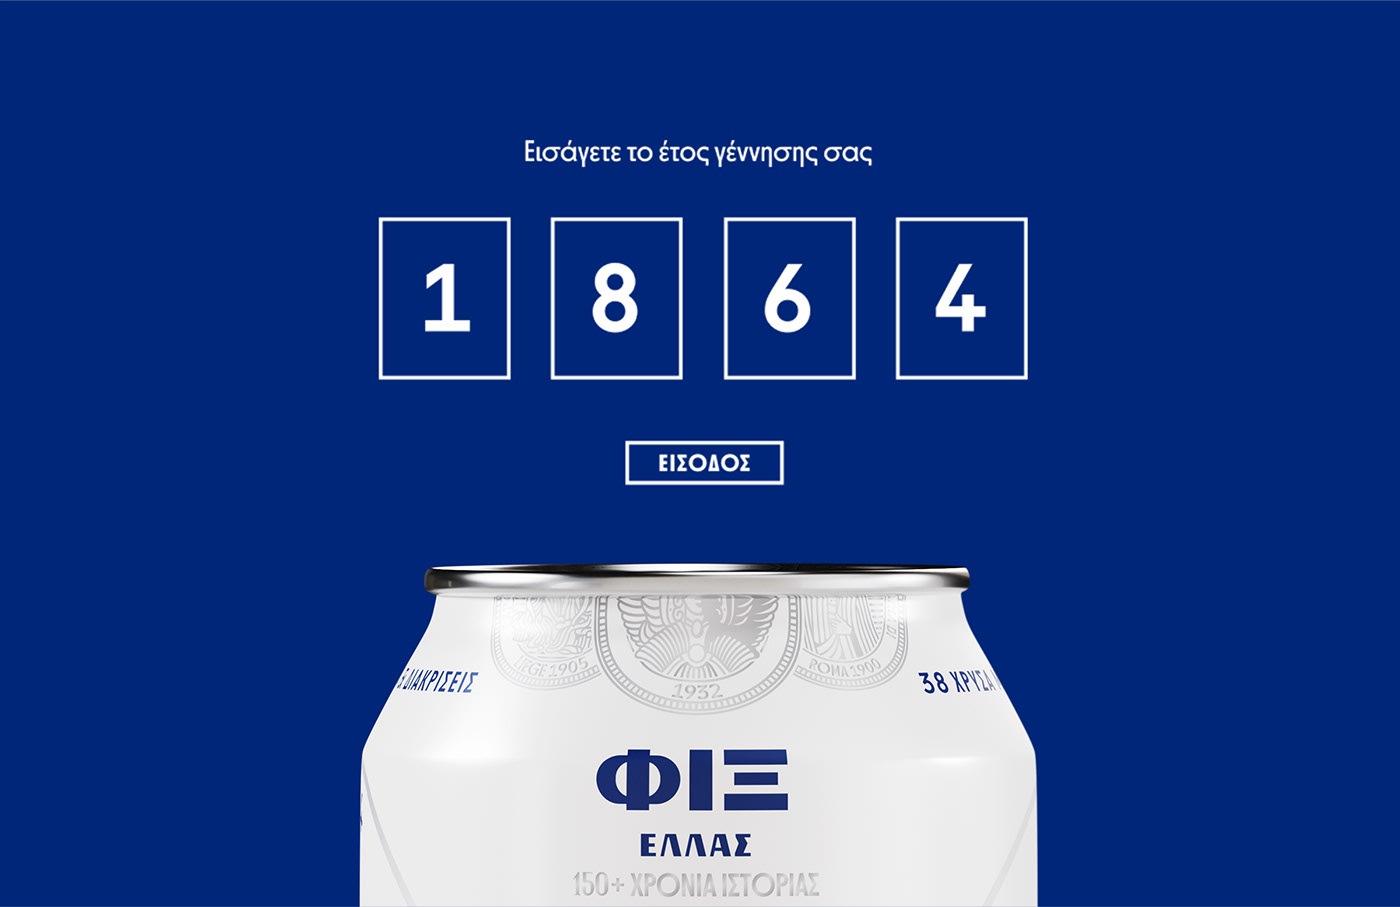 logo Logo Design Packaging pakaging design rebranding logoredesign beer fix bottle